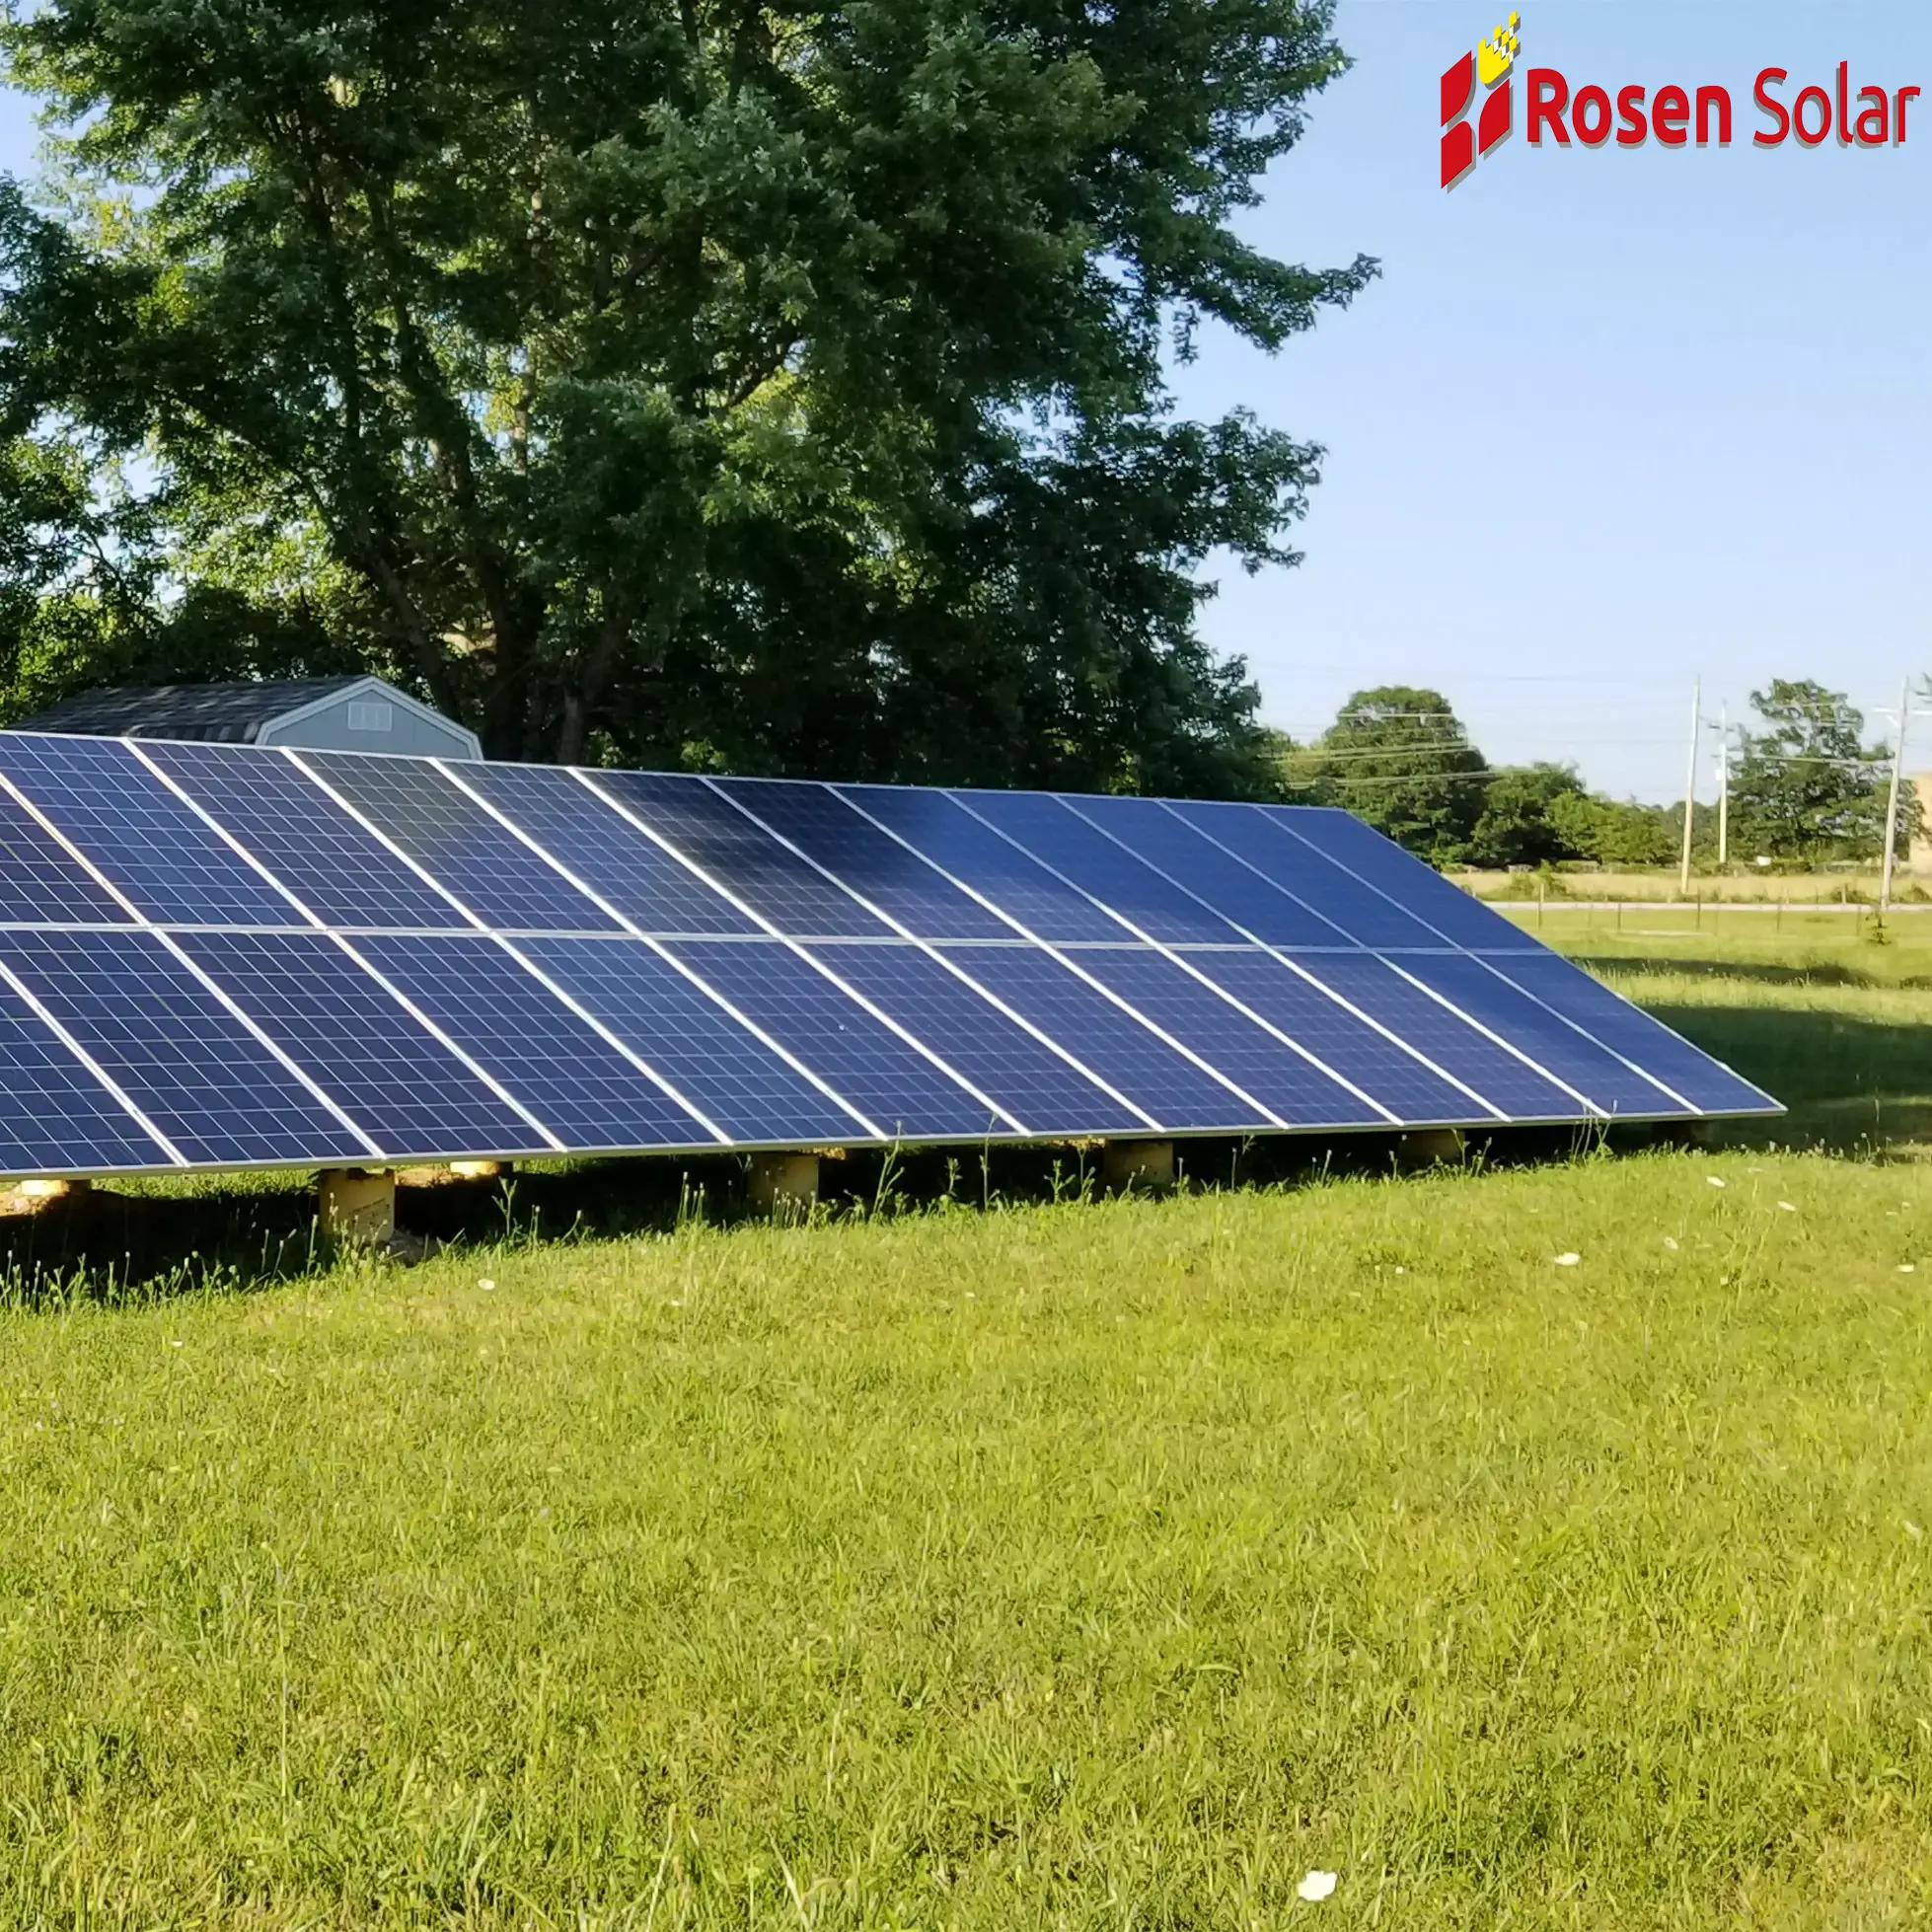 Rosen Top Pv System 12kw Solar Panels For Home Appliance